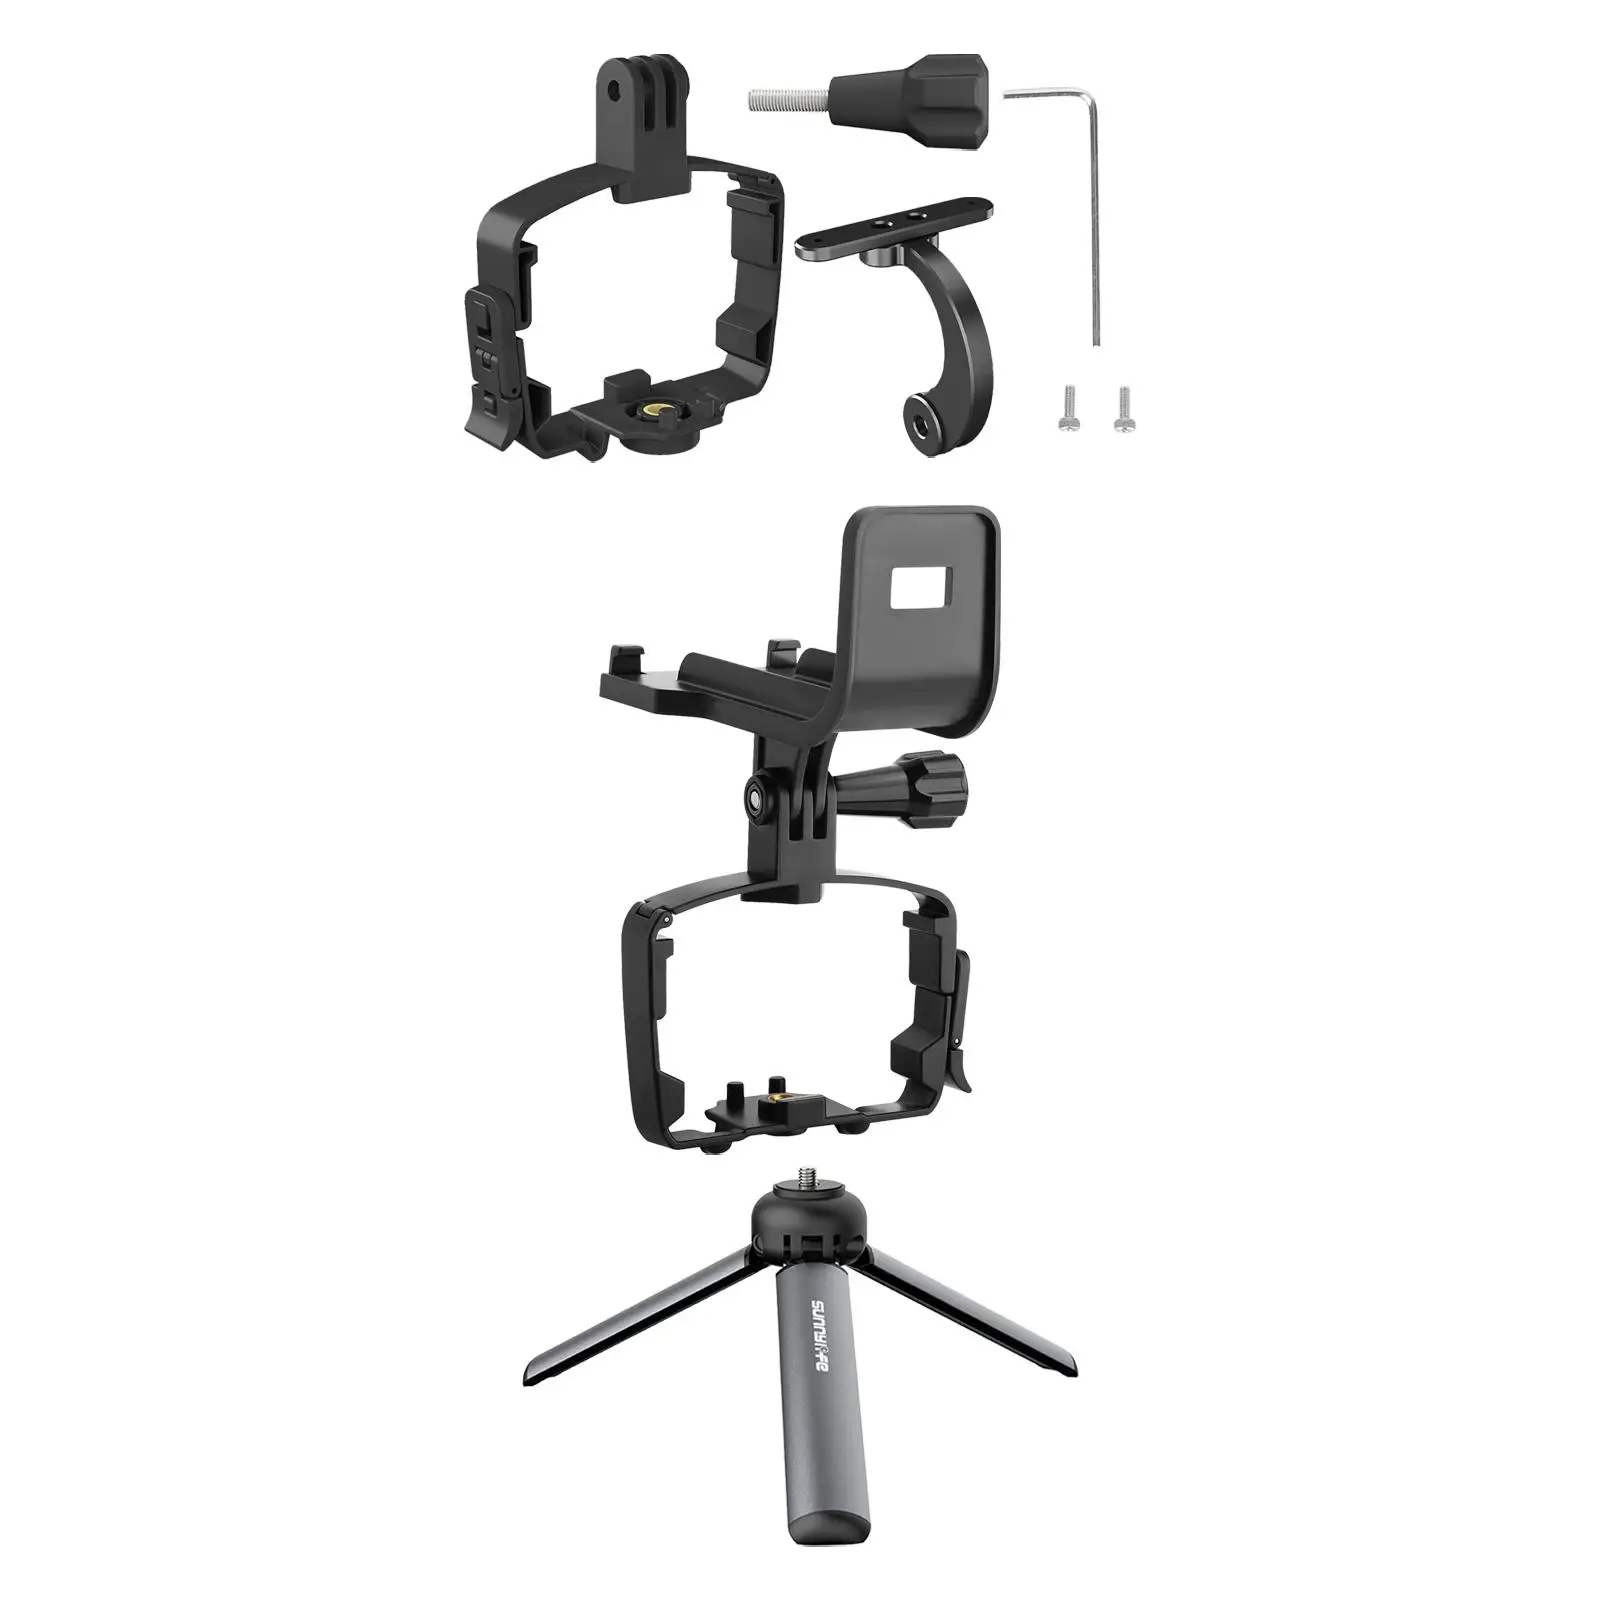 Handheld Gimbal Stabilizer Selfie Stick Bracket Modification Accessories